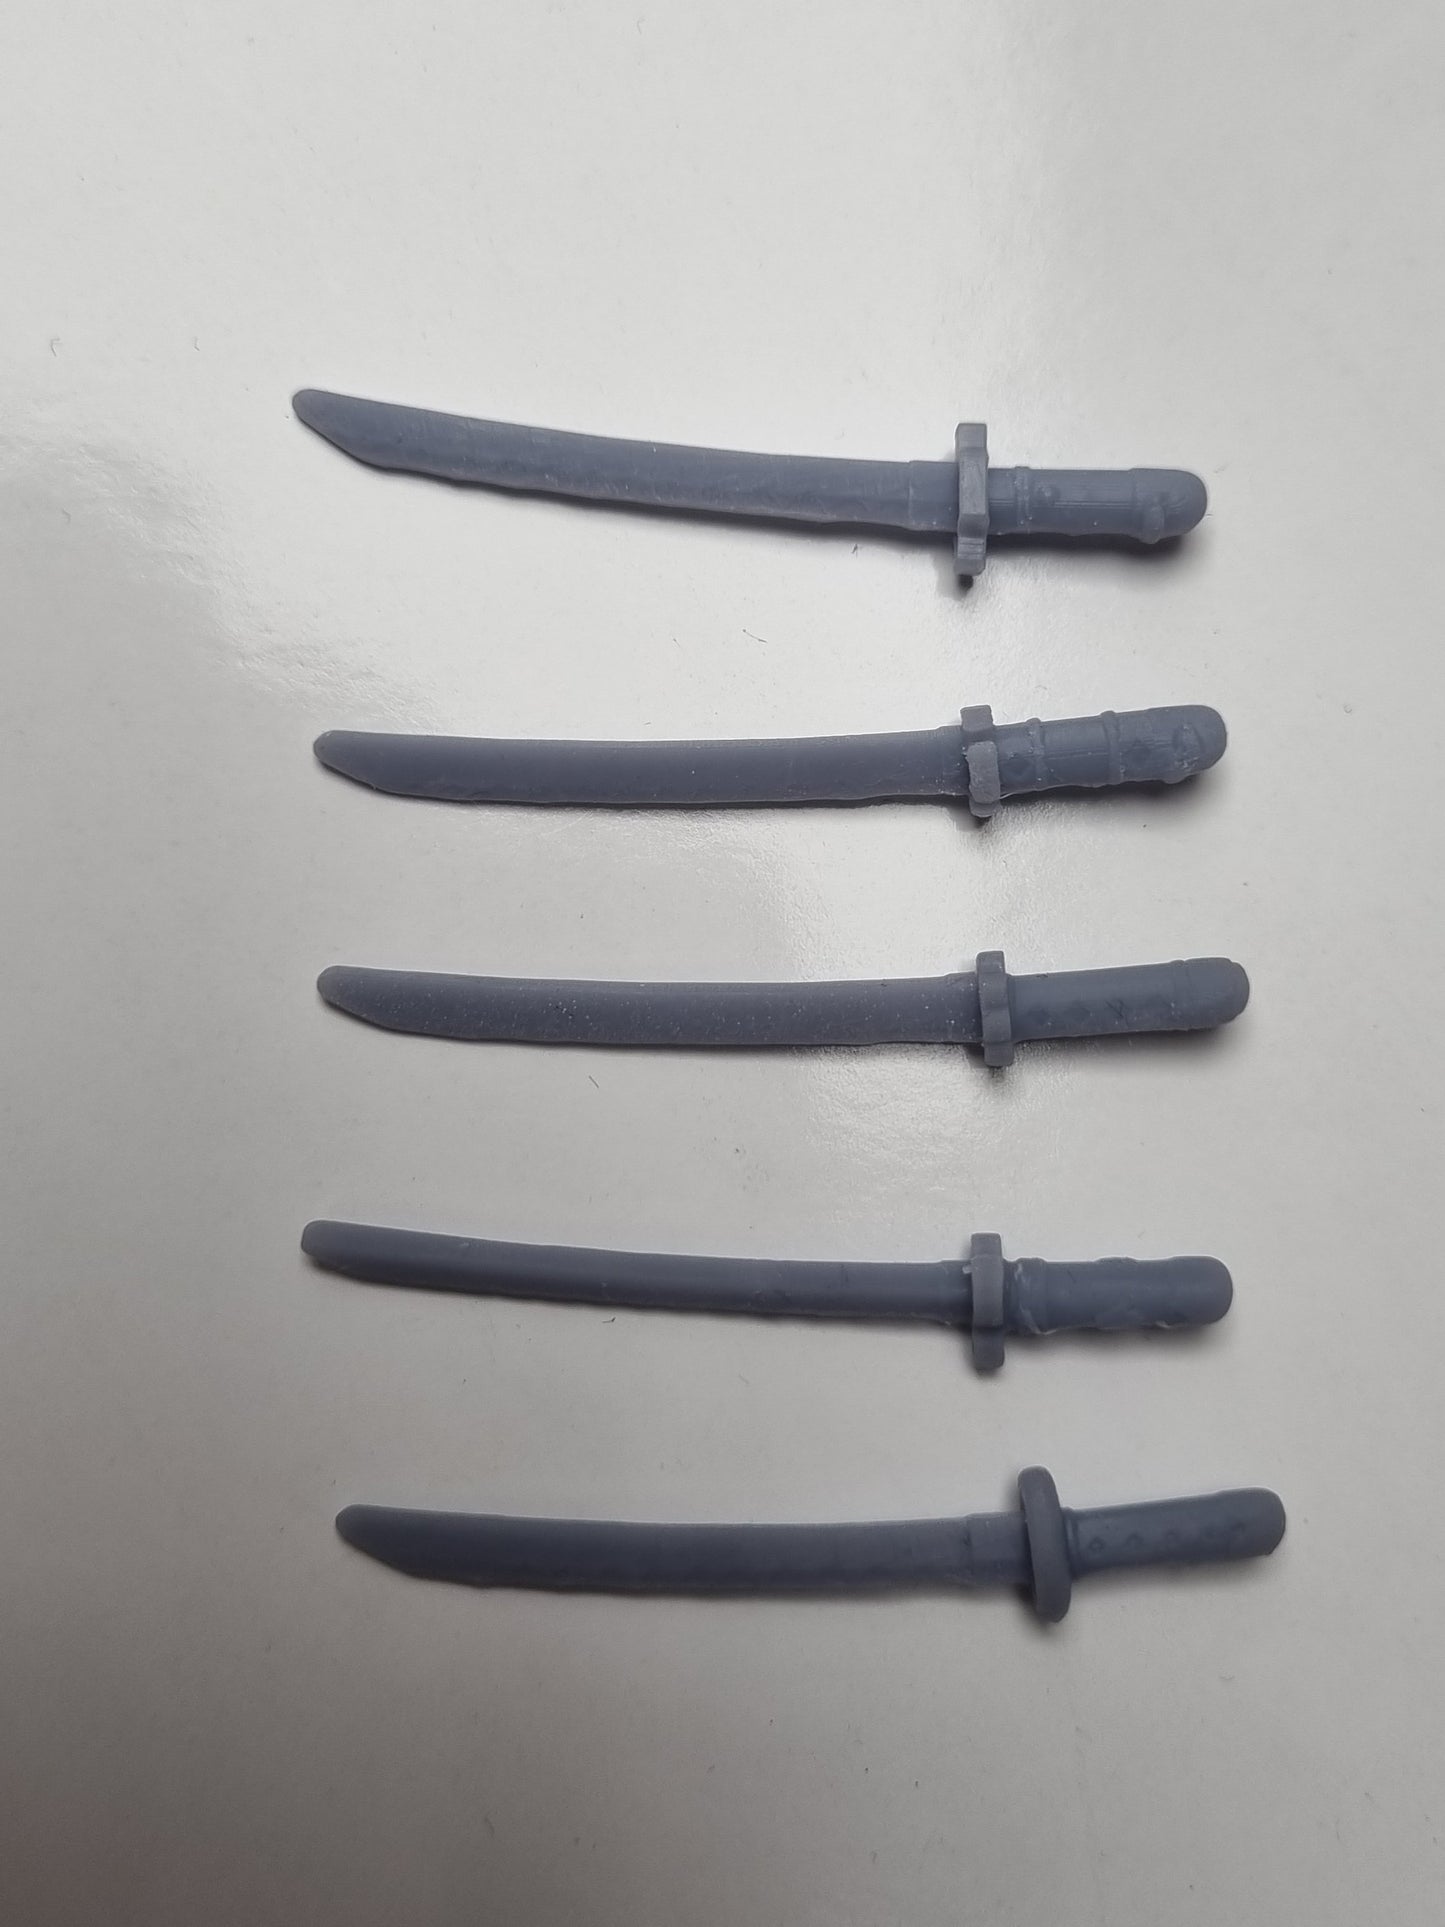 Building toy custom 3D printed 3 sword style swords!